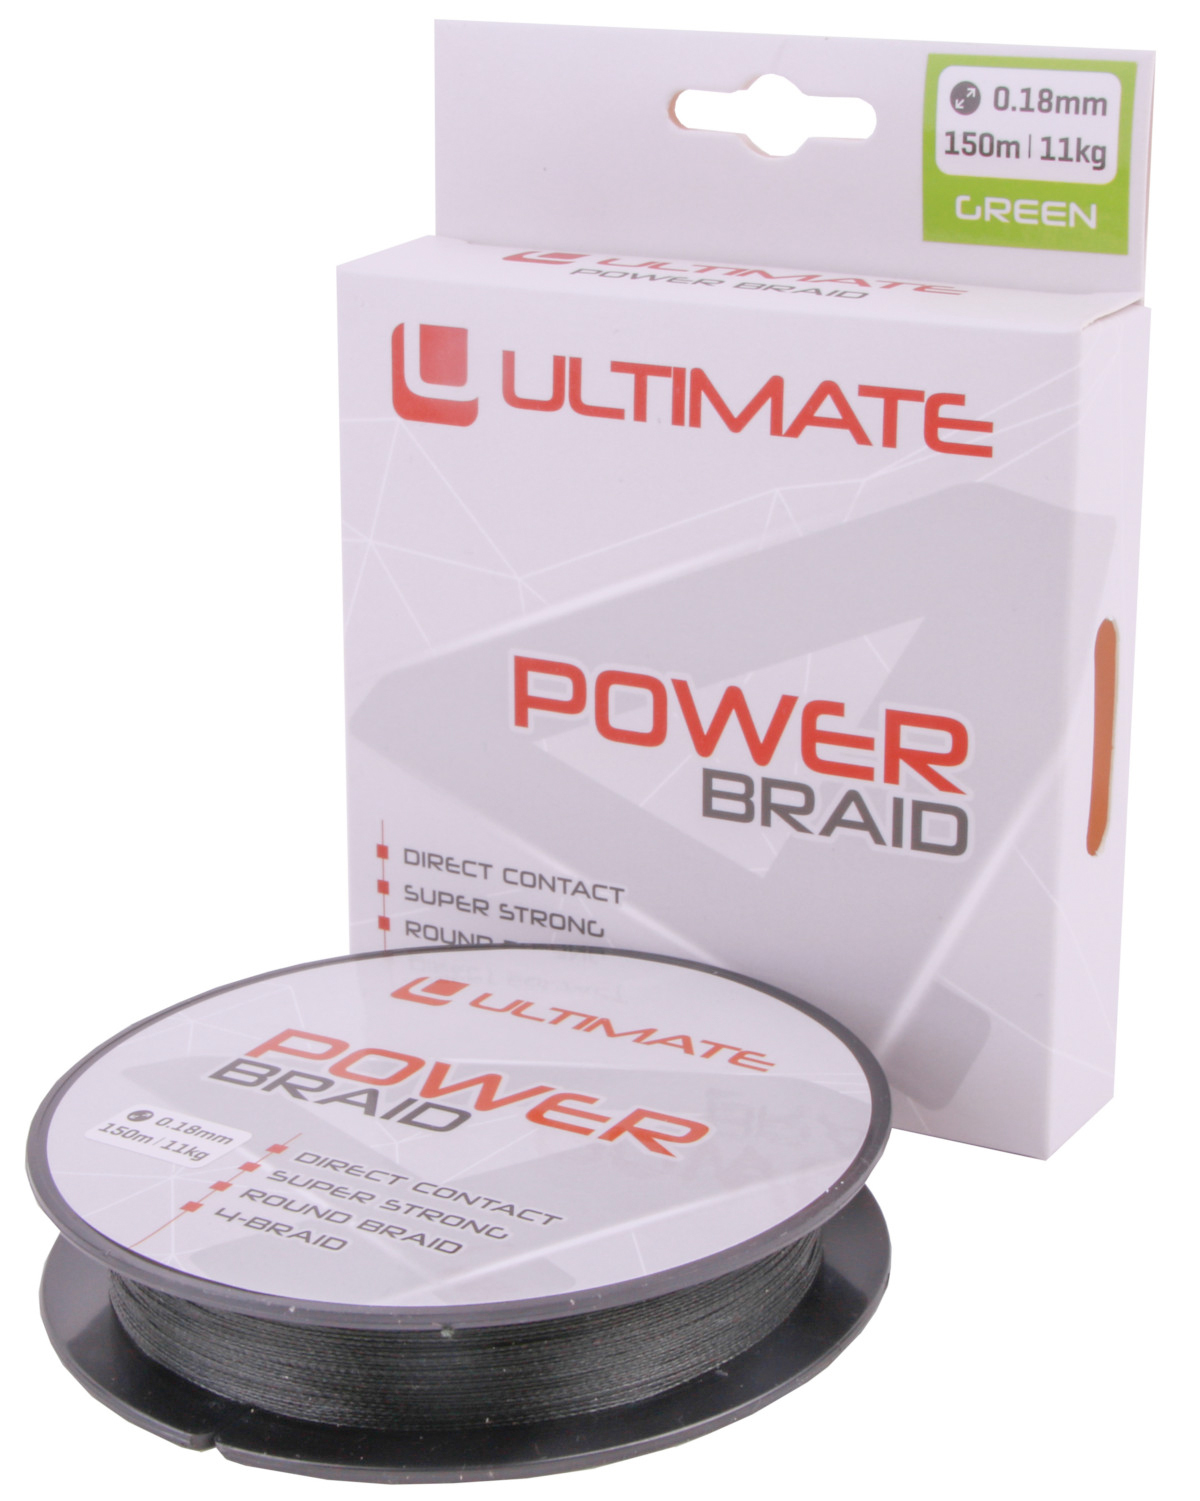 Complete Ultimate Dead Bait Set - Ultimate Power Braid